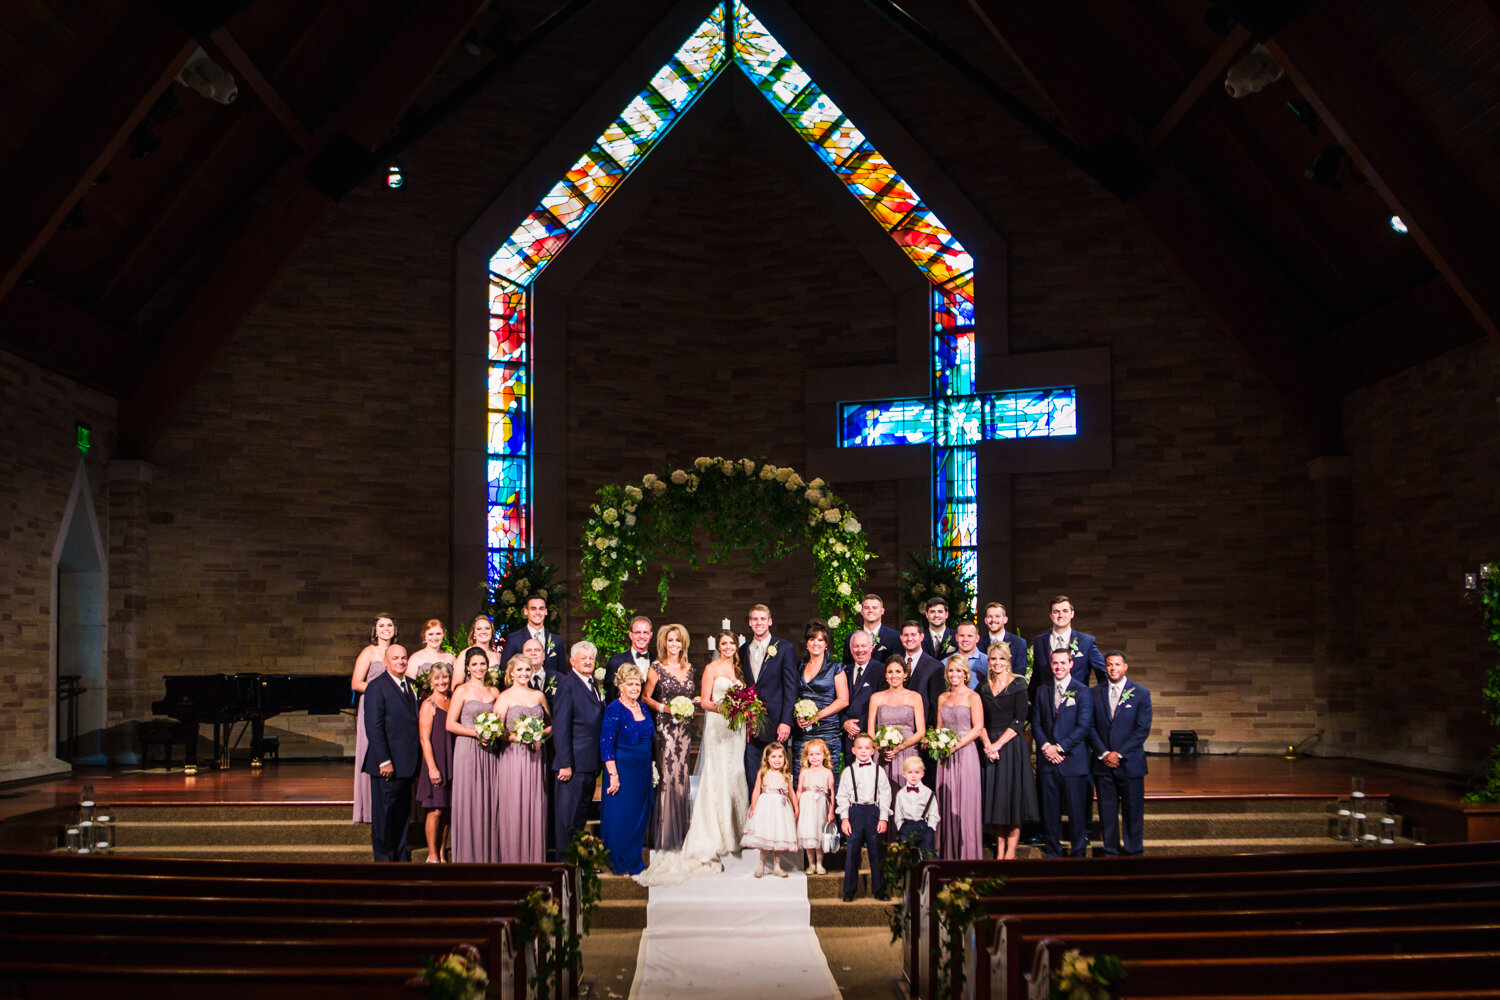  Cherry Hills Community Church wedding ceremony. Photos by JMGant Photography. 